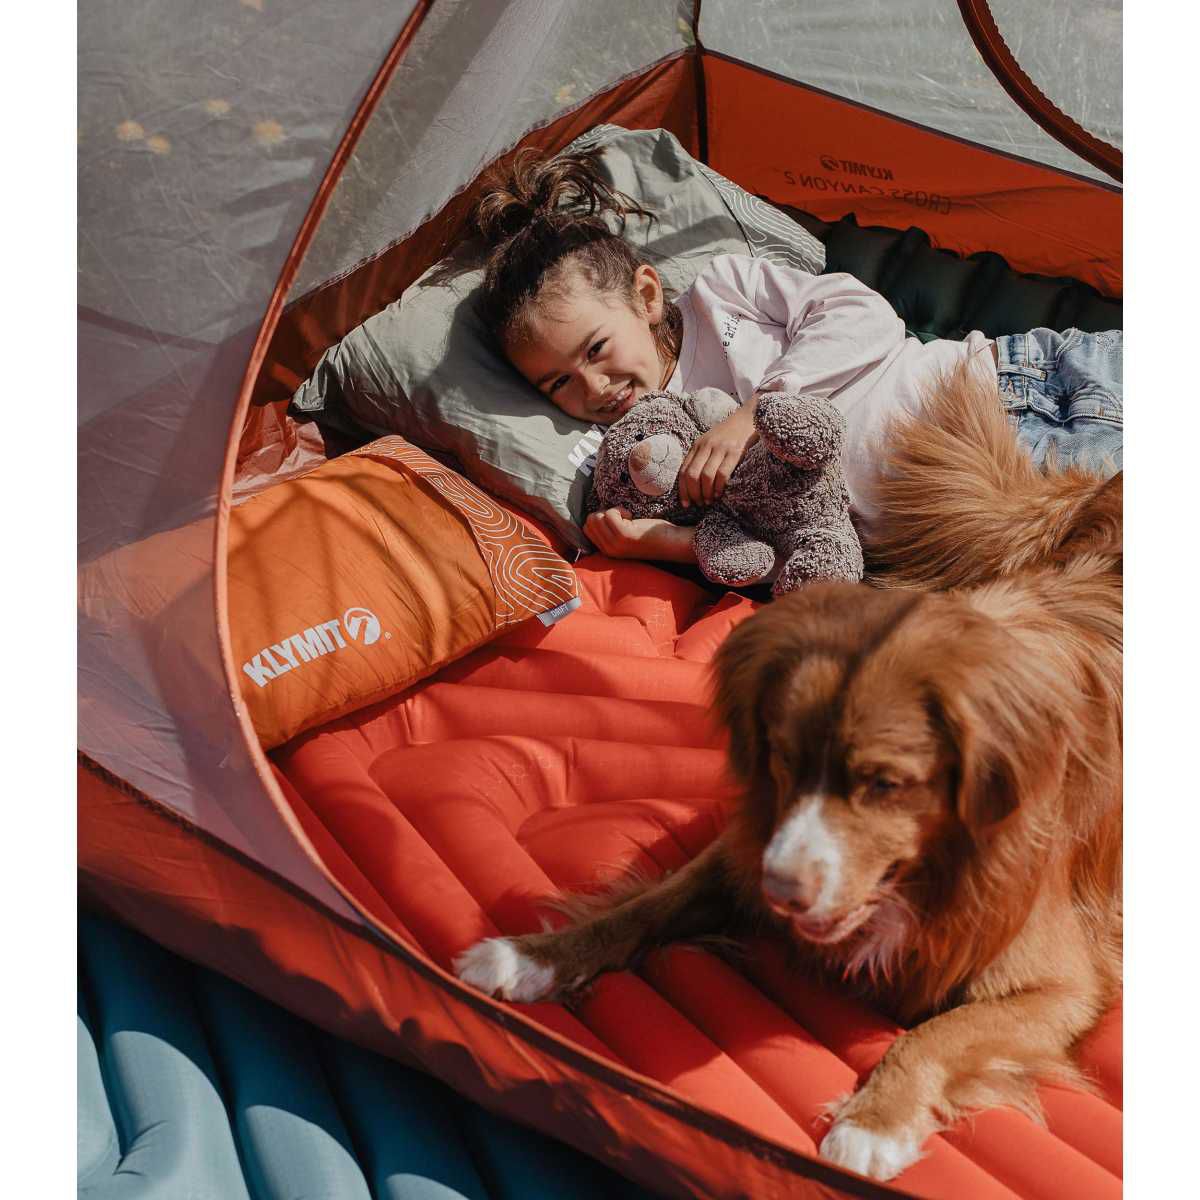 KLYMIT Drift-Pillow Campingkissen REG Orange - 12DROR01C